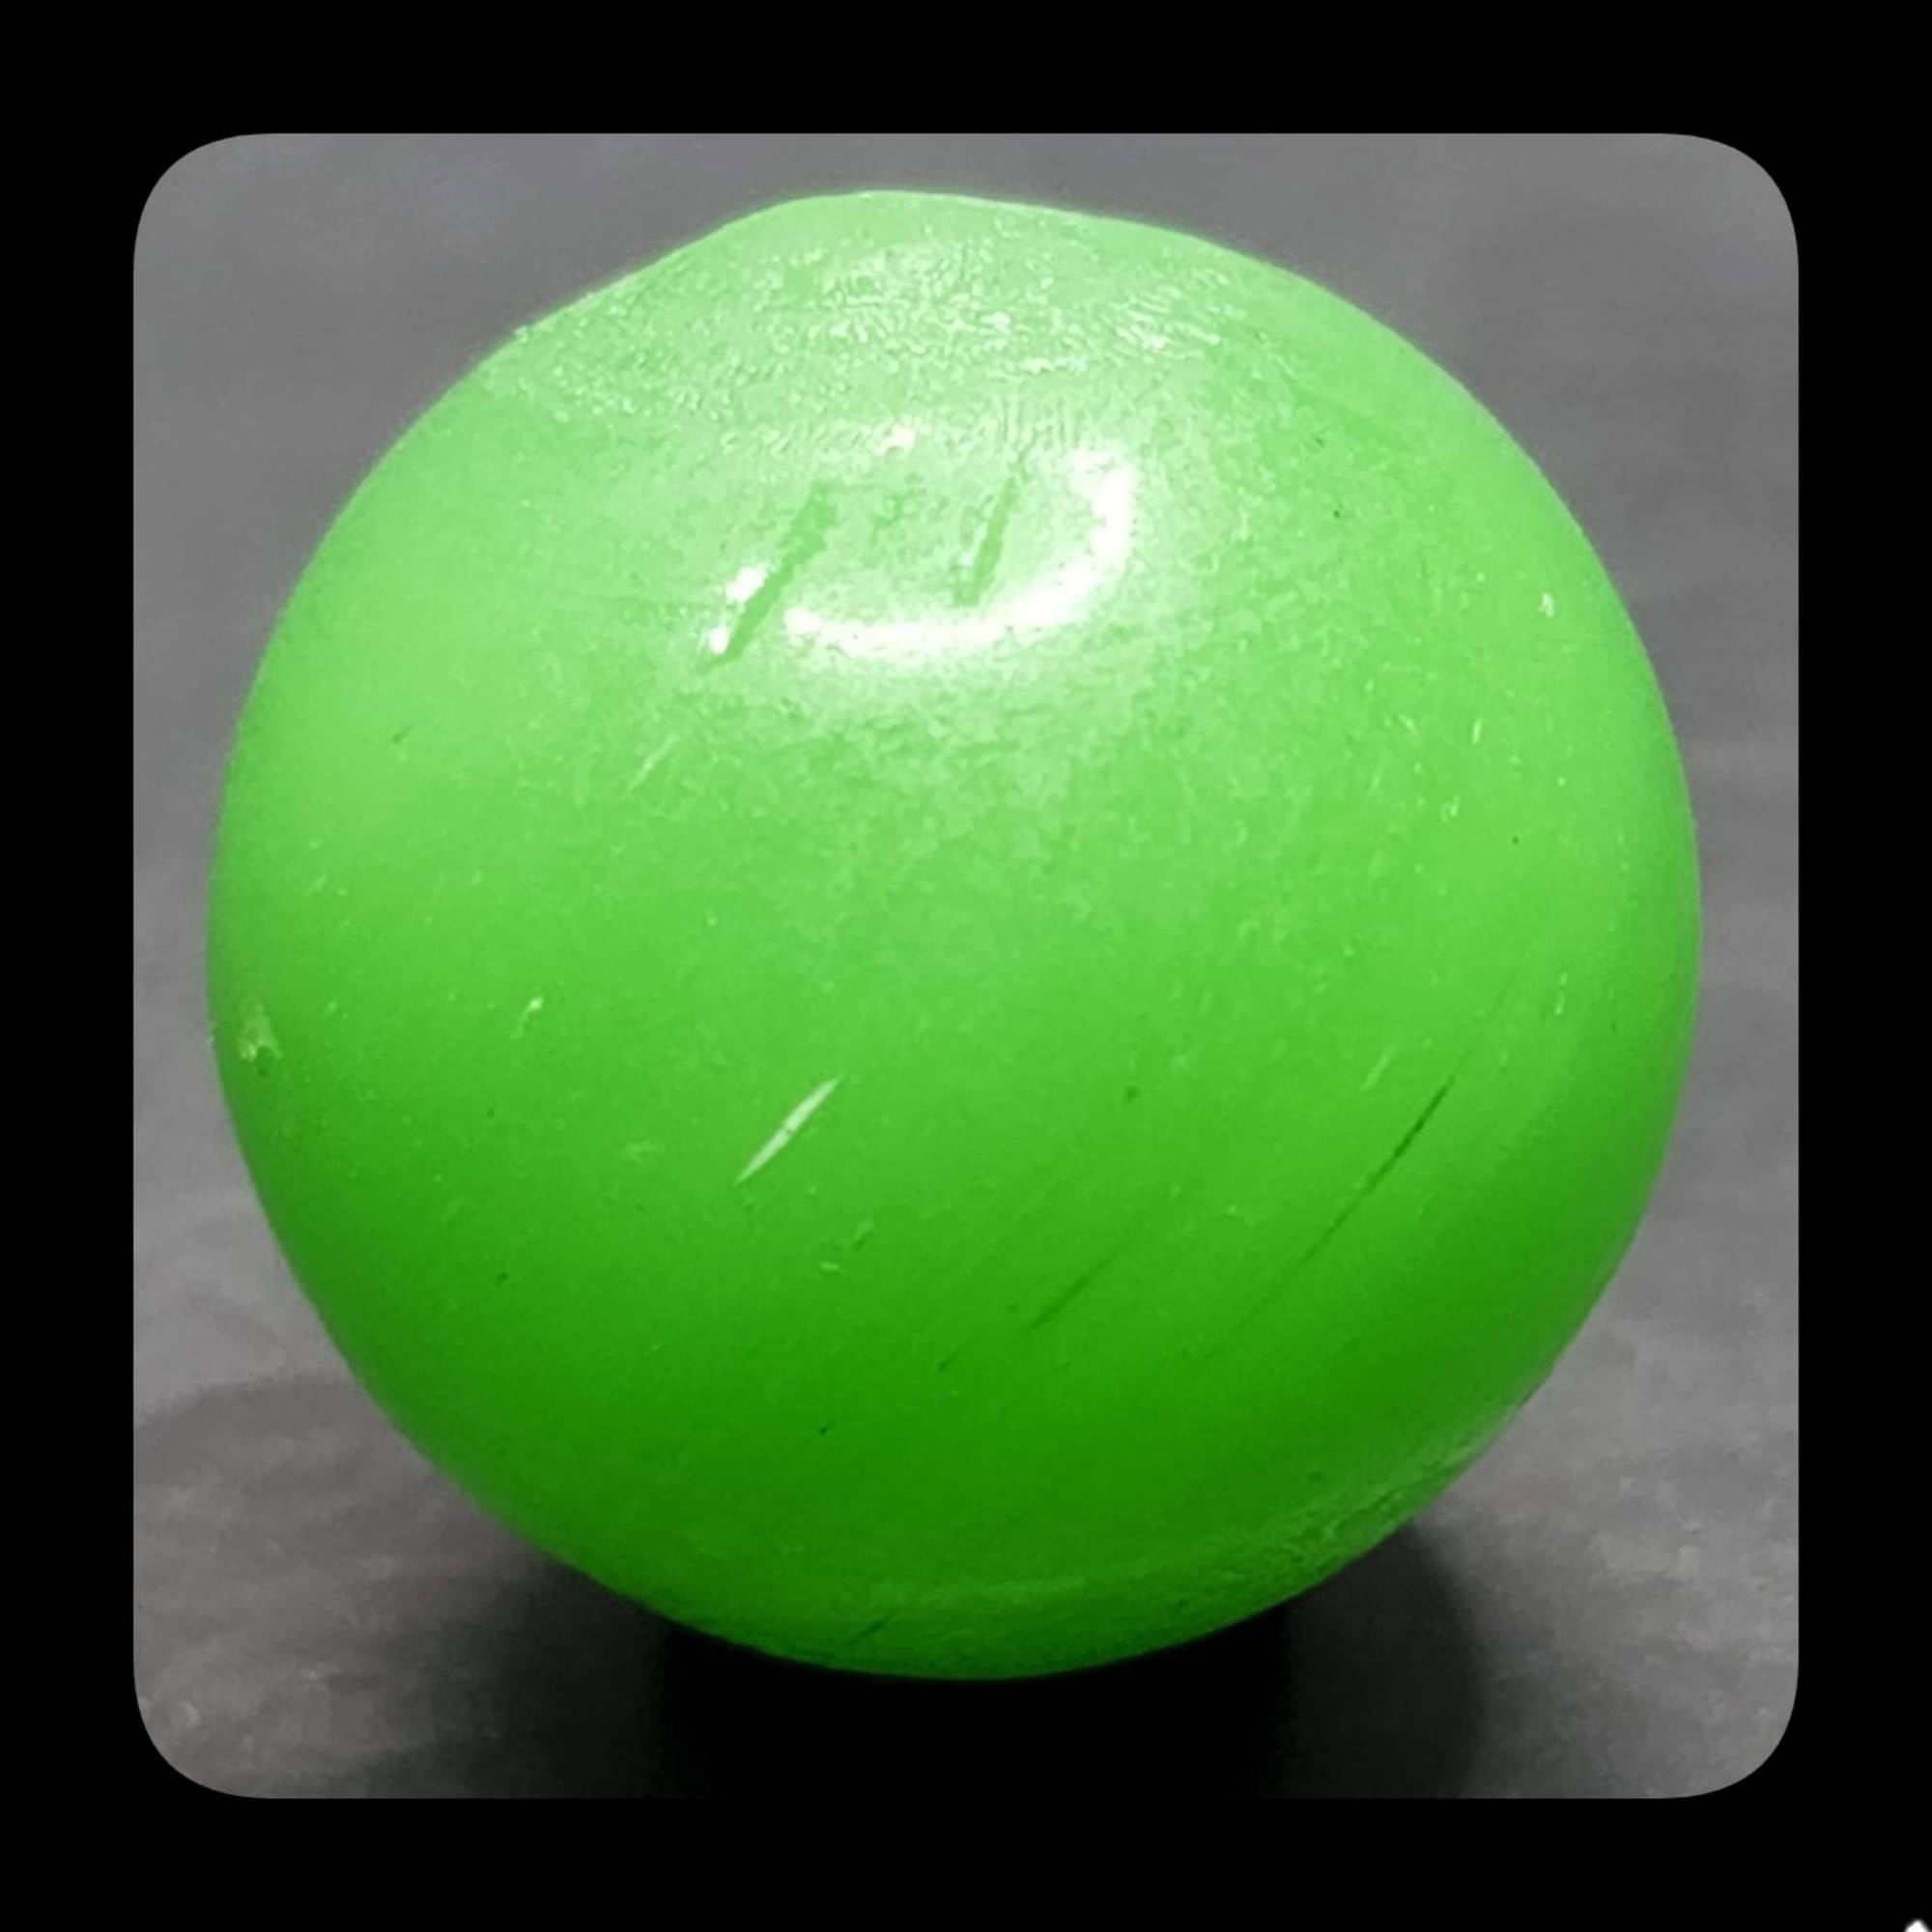 $58 23/32"- Beautiful larger sized Translucent German Handmade Green Melon Ball Mint minus